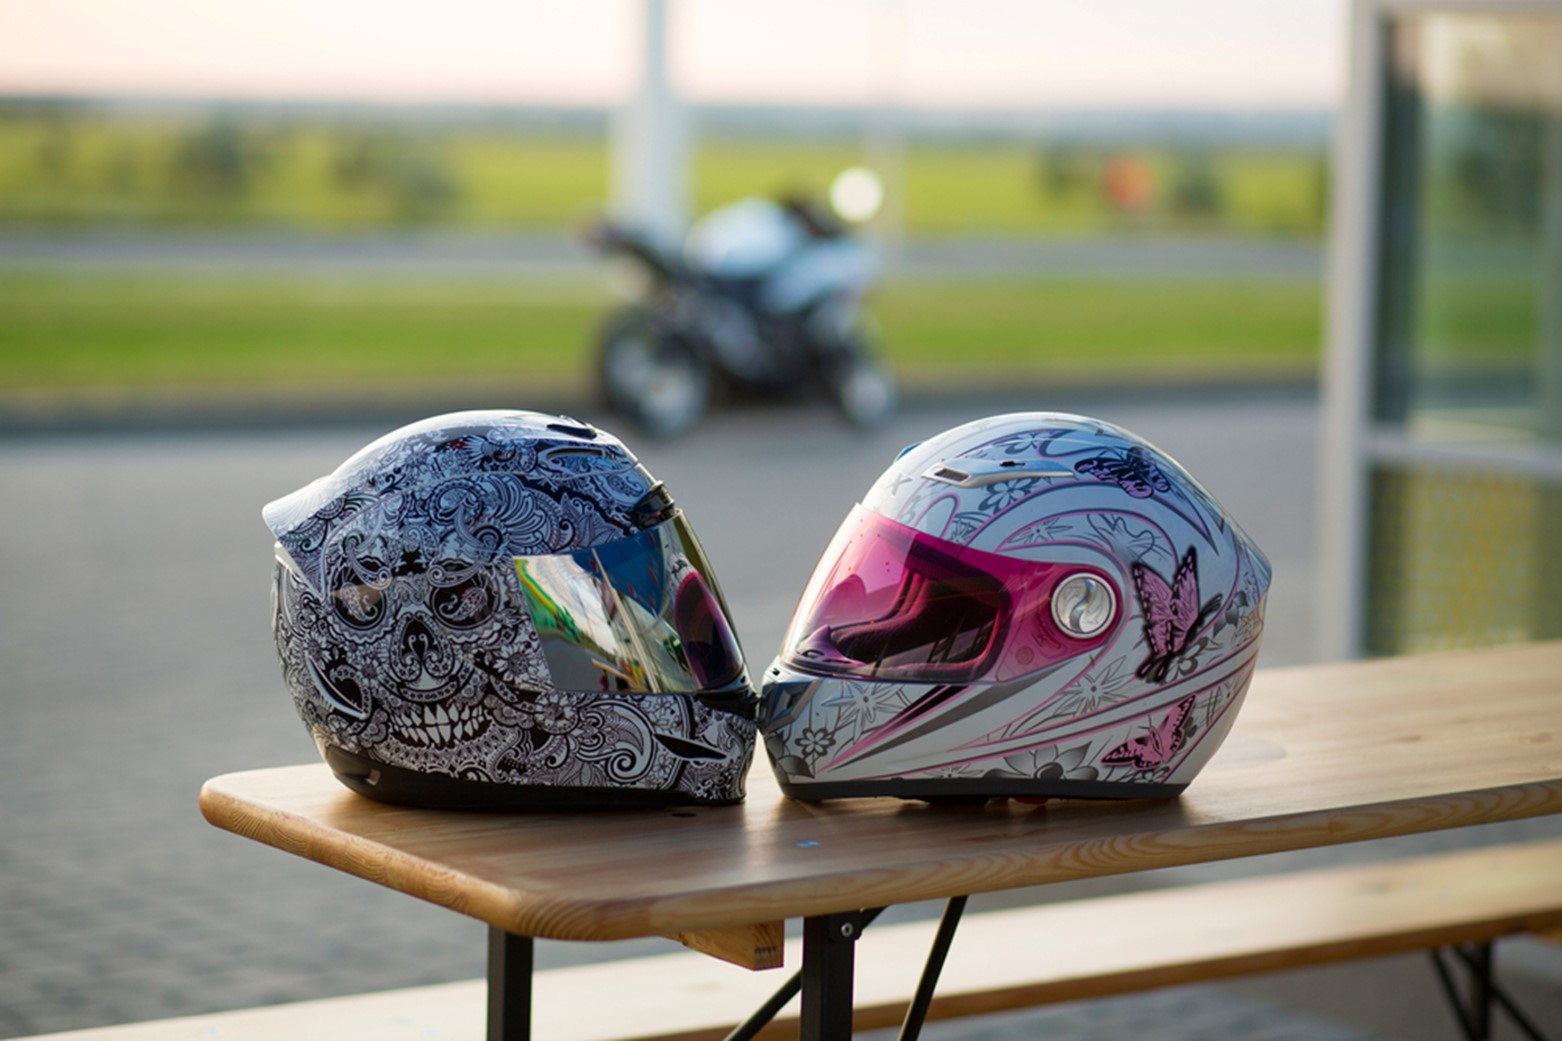 Cool motorbike helmets uk canada helm airbrush